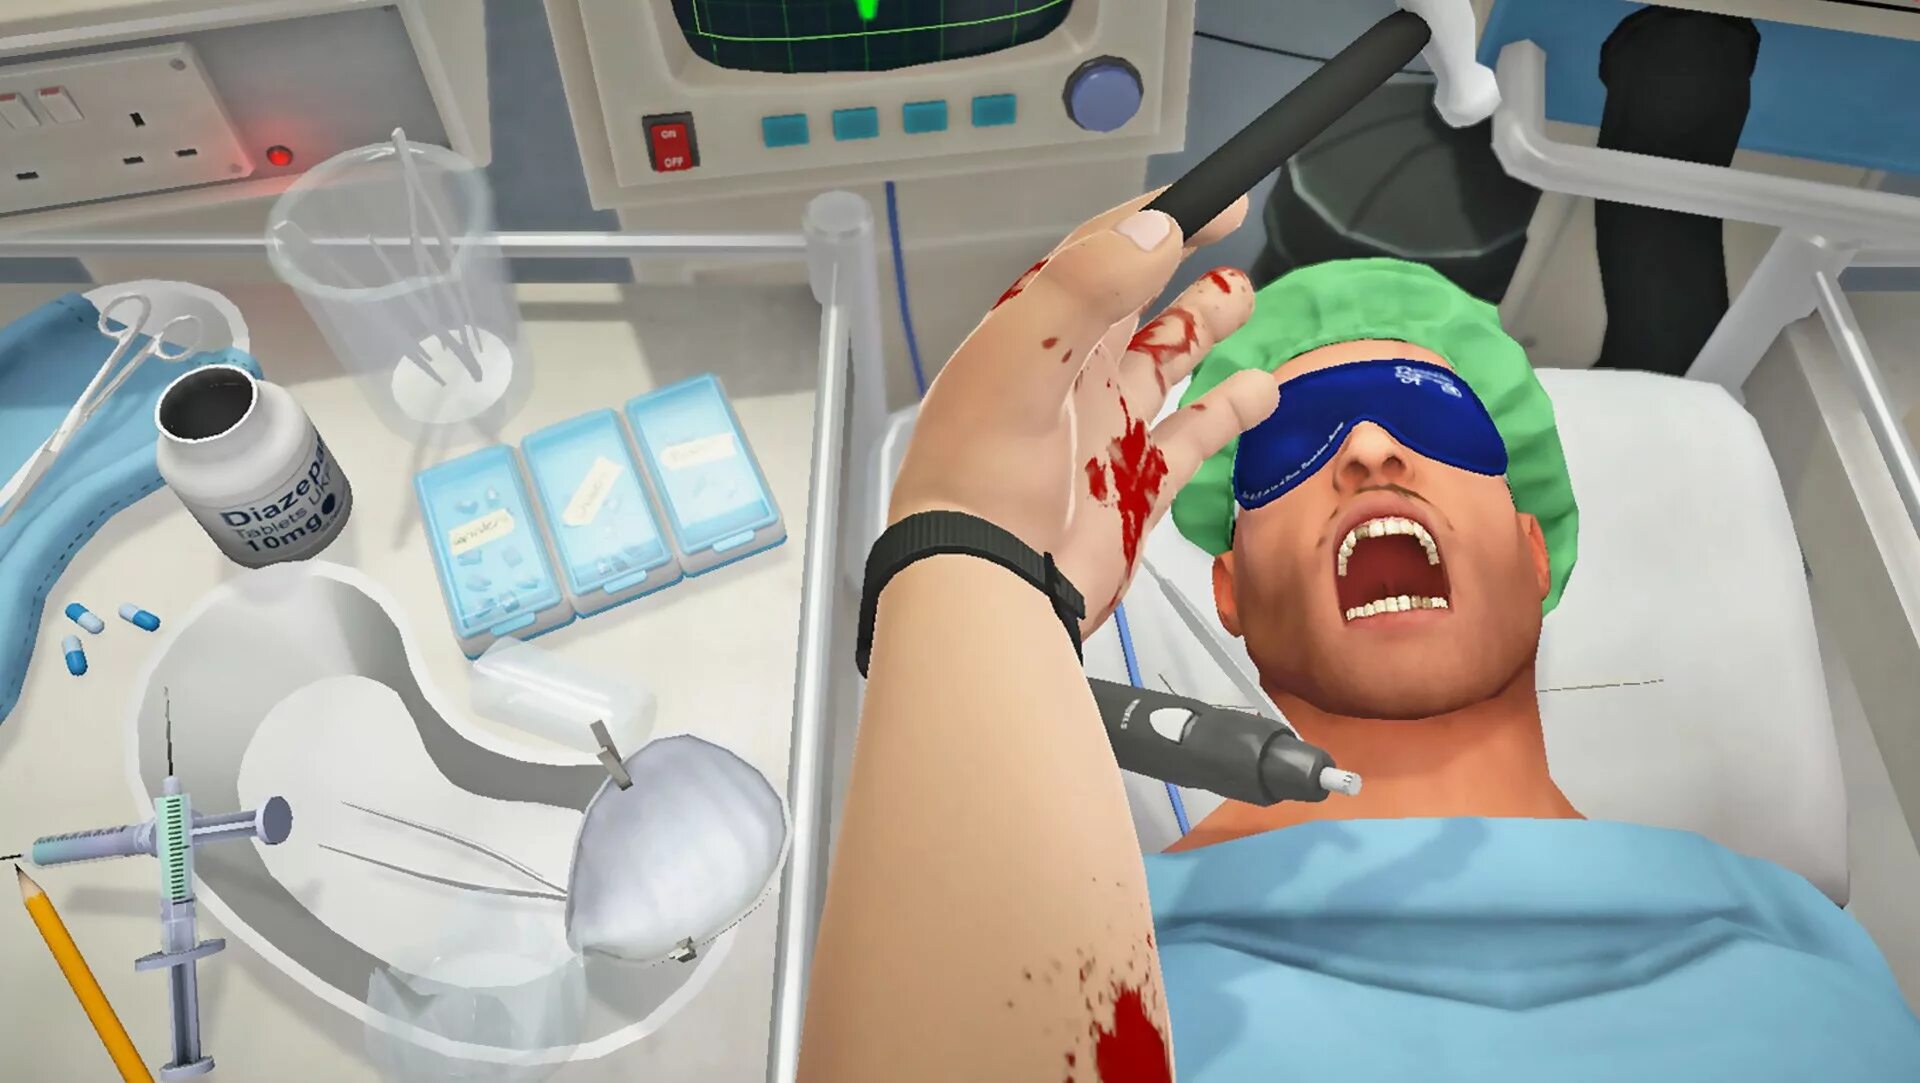 Что такое симулятор в игре. Симулятор хирурга Нинтендо. Surgeon Simulator 2013. Anniversary Edition.